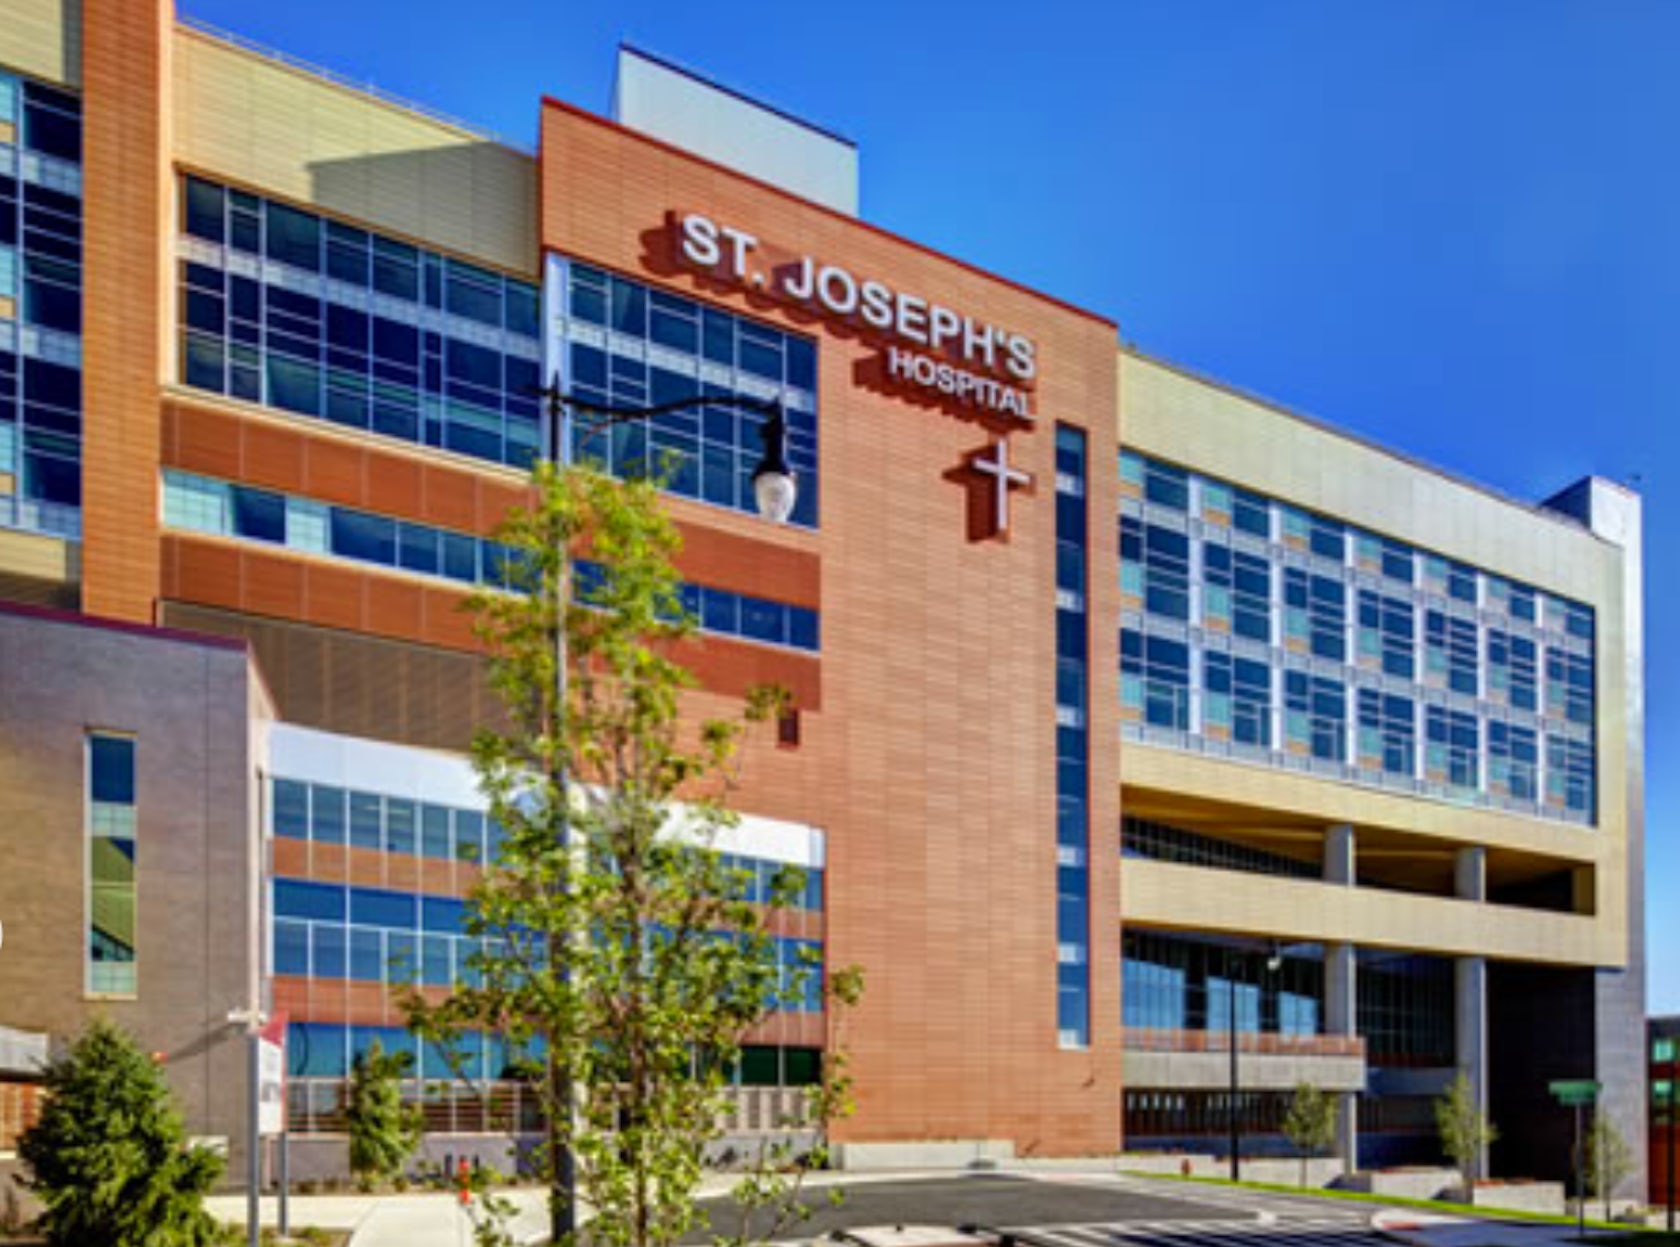 St Josephs Hospital Health Center Architizer